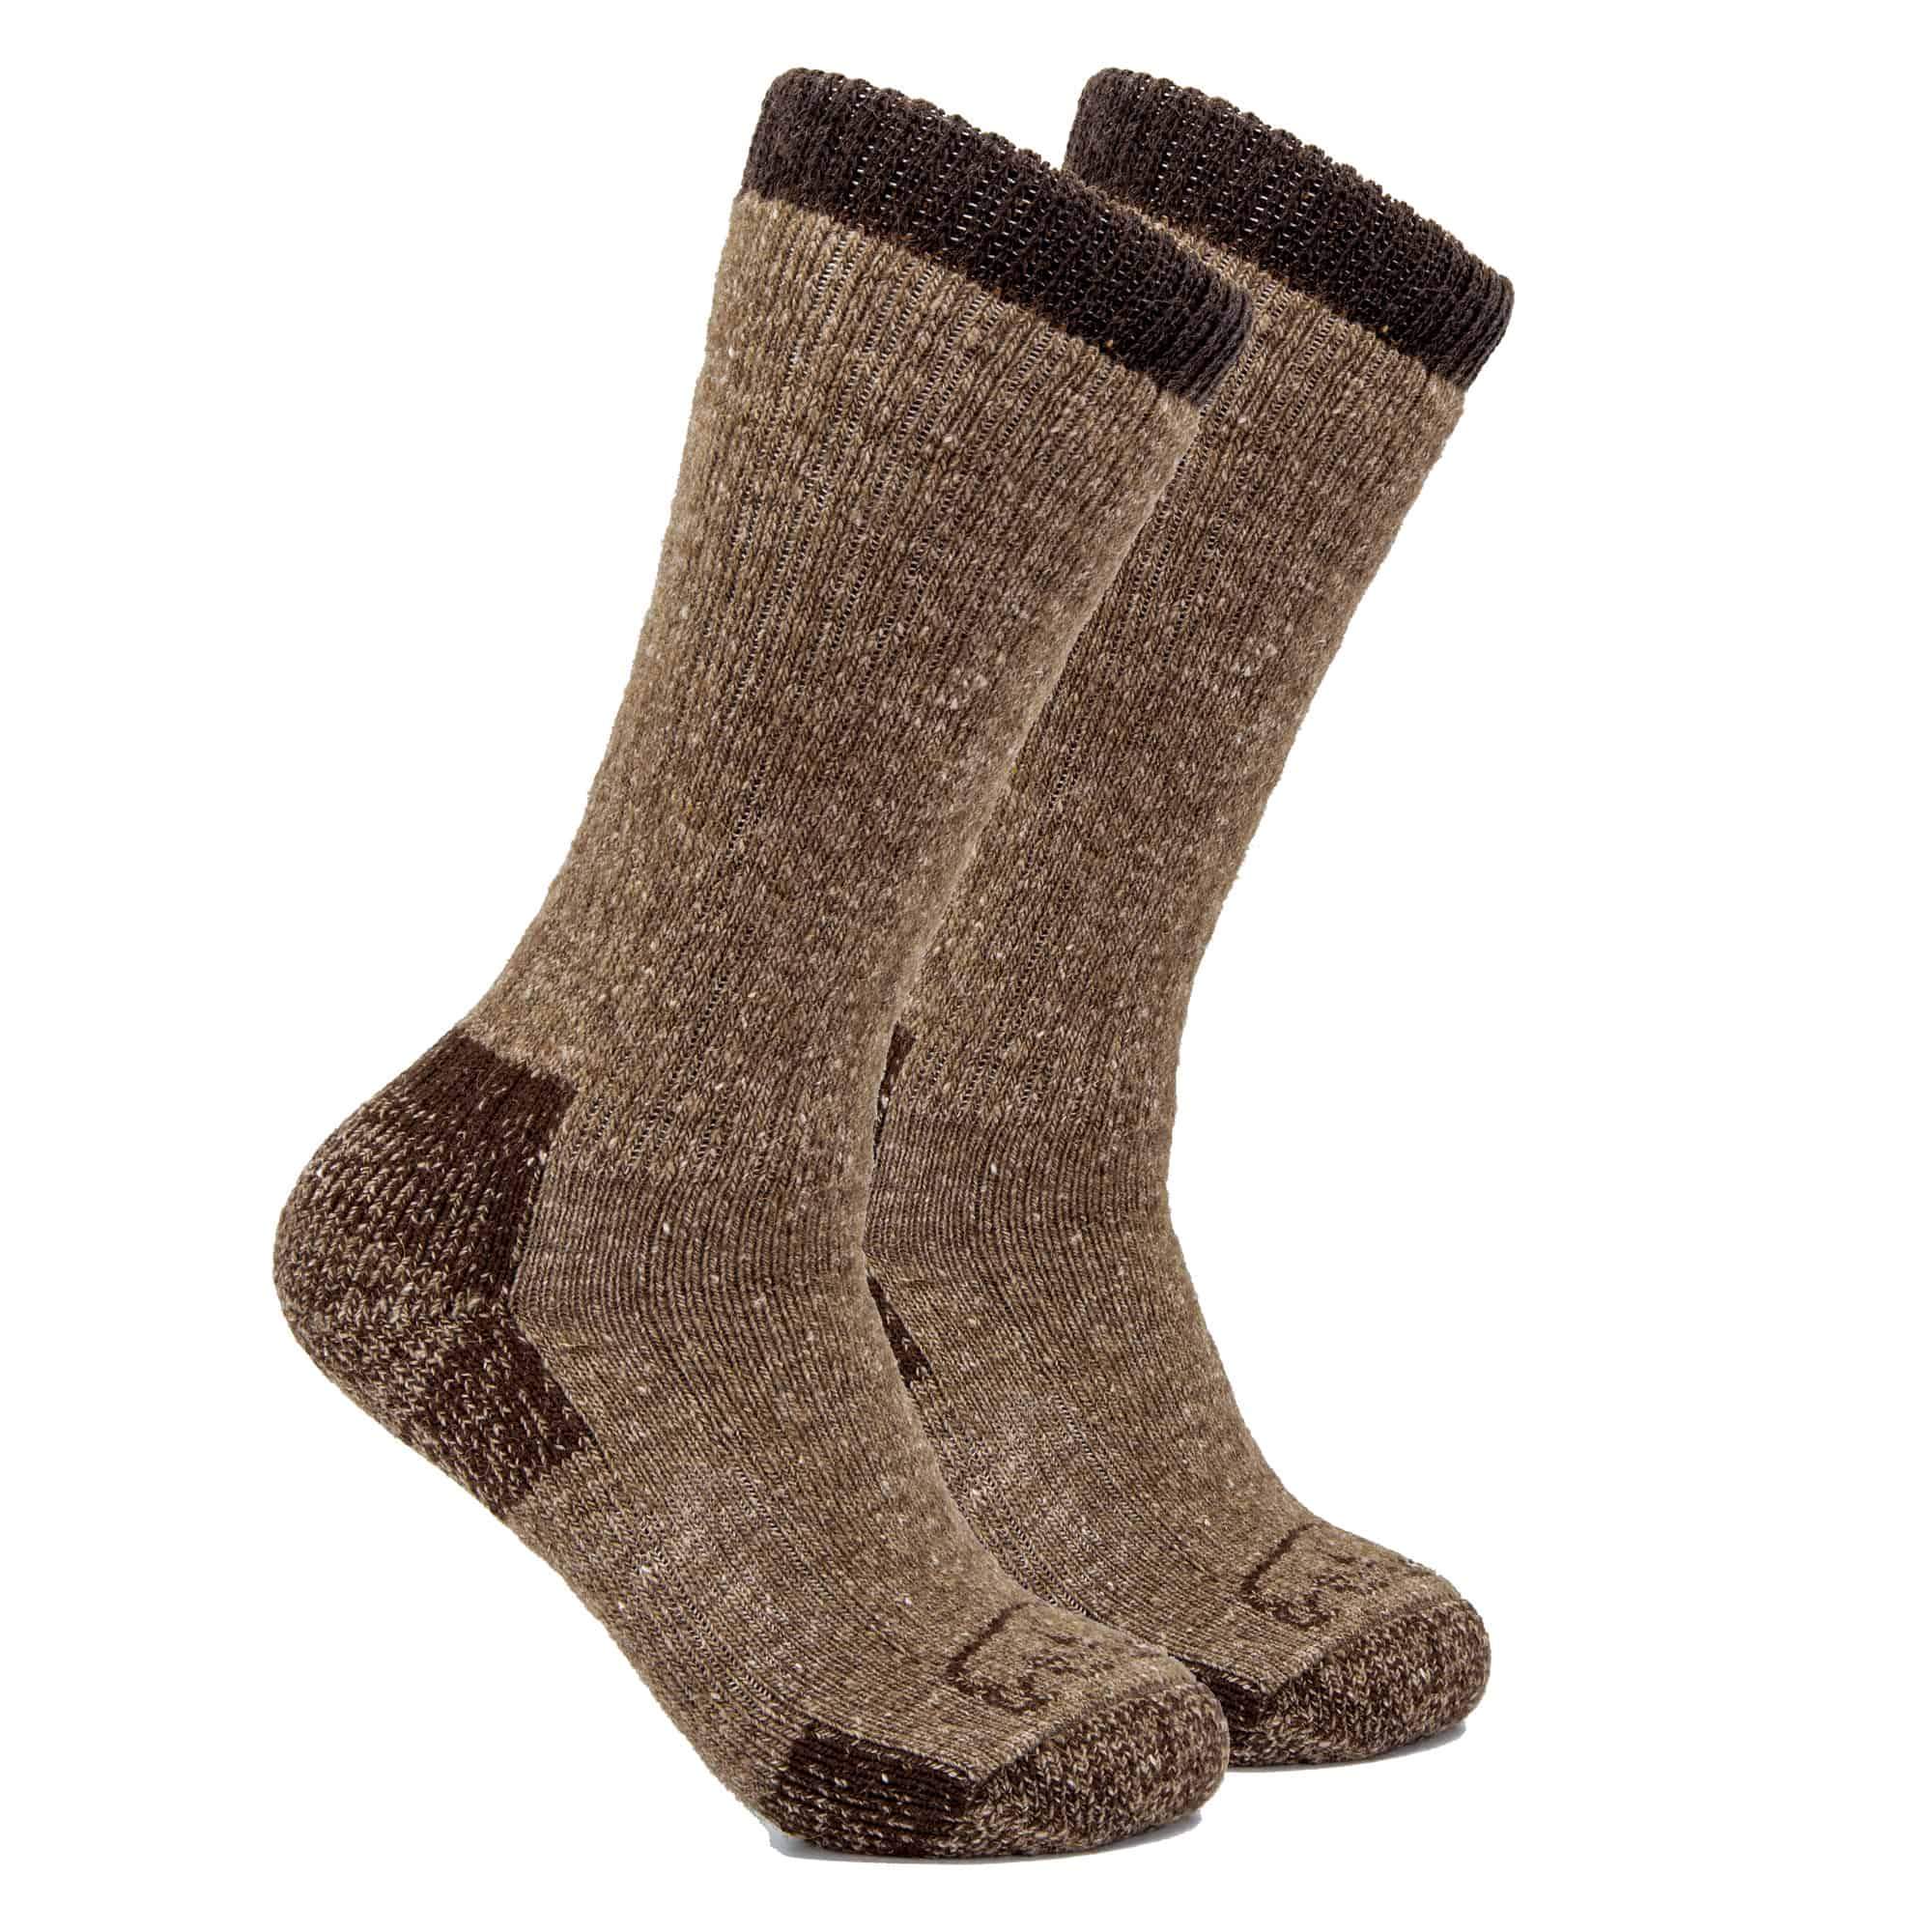 The Buffalo Wool Co. Socks Small / 1-Pair Trekker - Advantage Gear Boot Socks